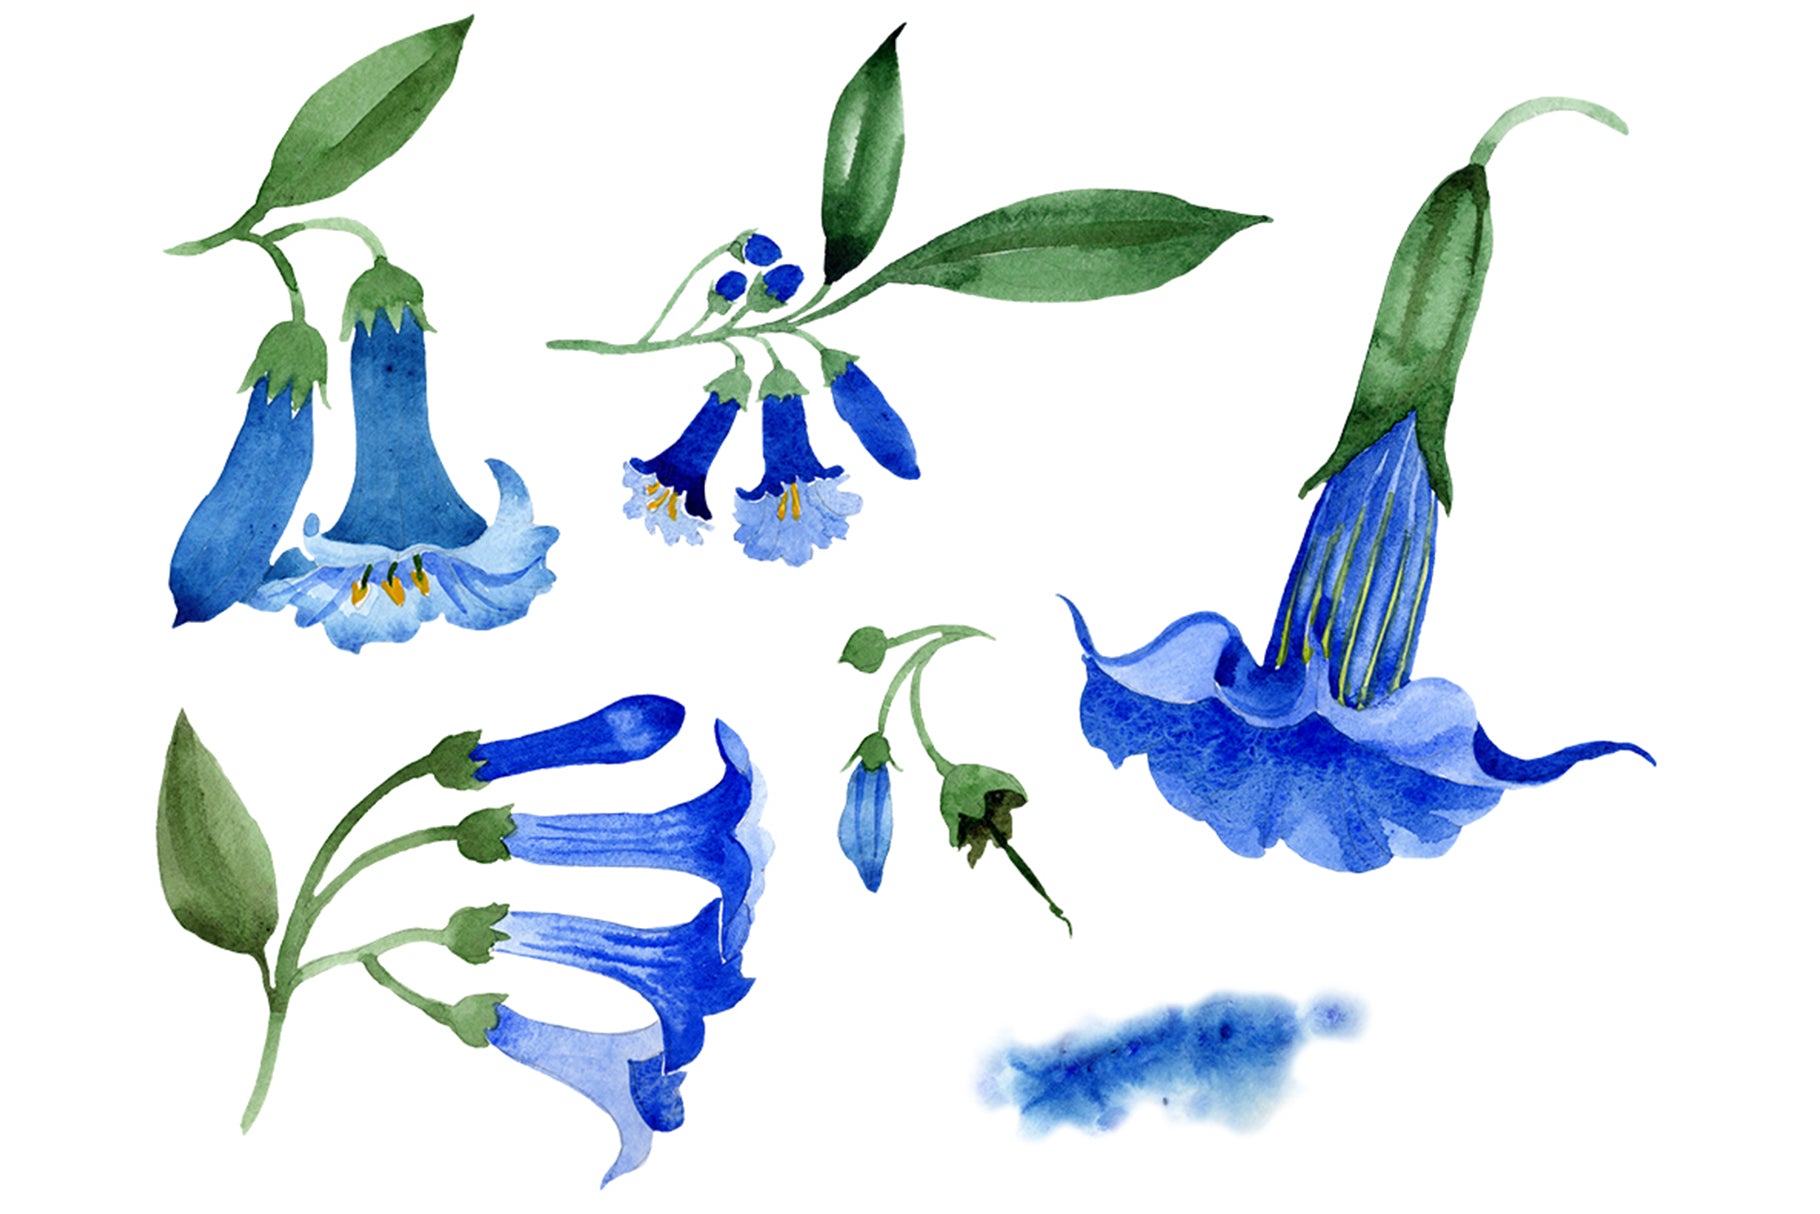 Brugmansia Blue flower Watercolor png